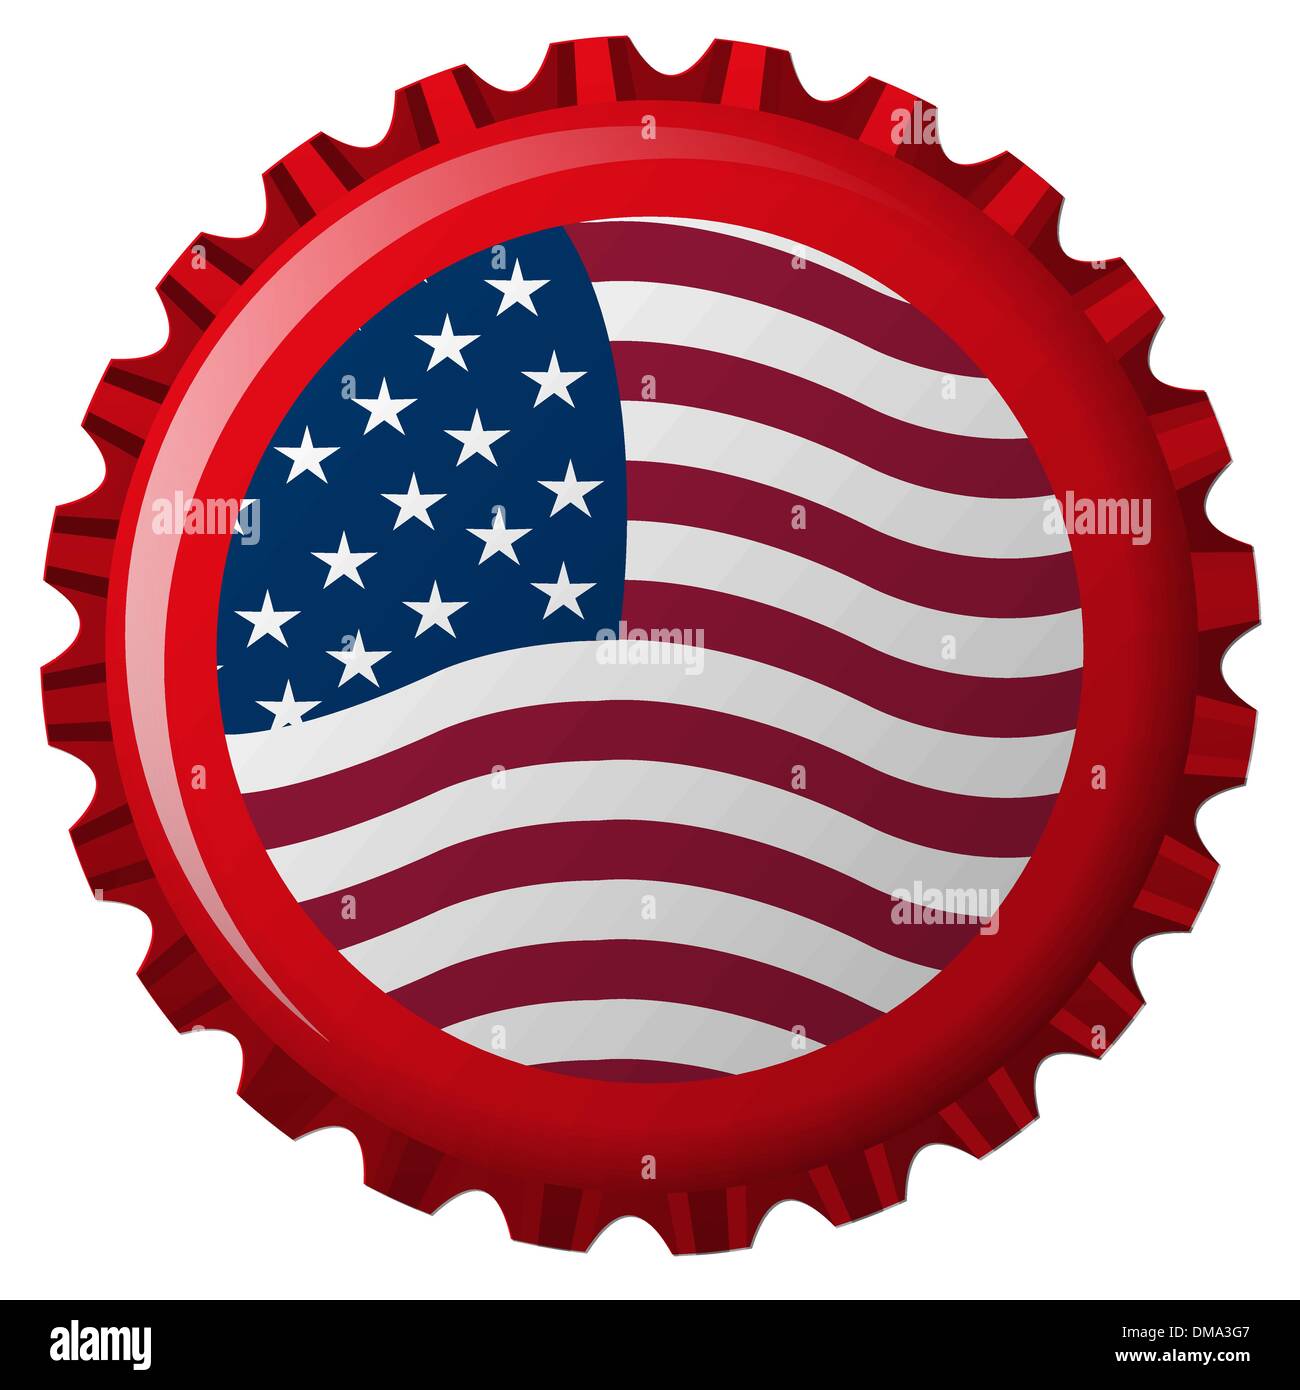 united states stylized flag on bottle cap Stock Vector